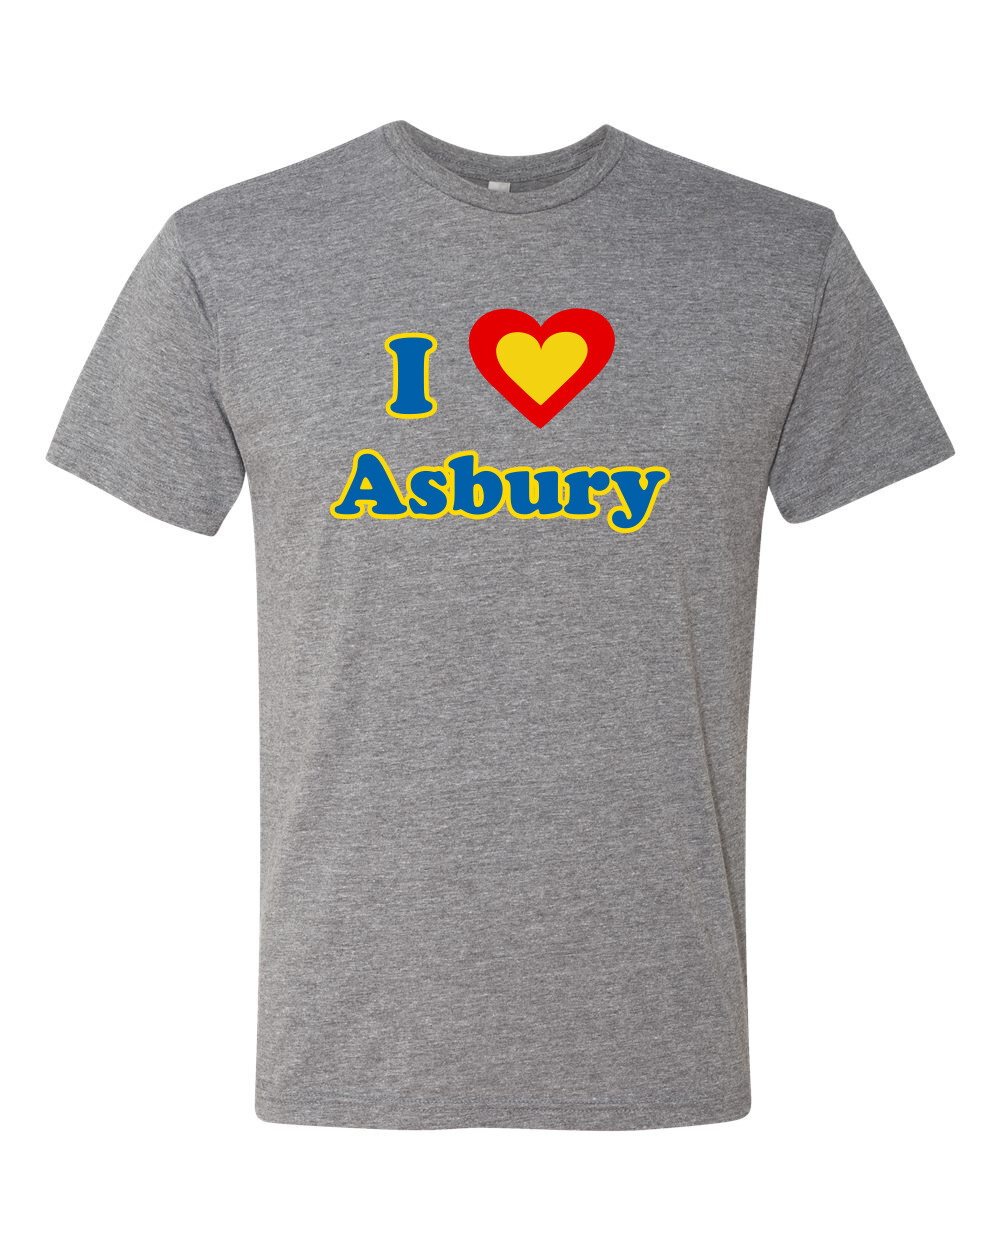 I HEART Asbury T-shirts